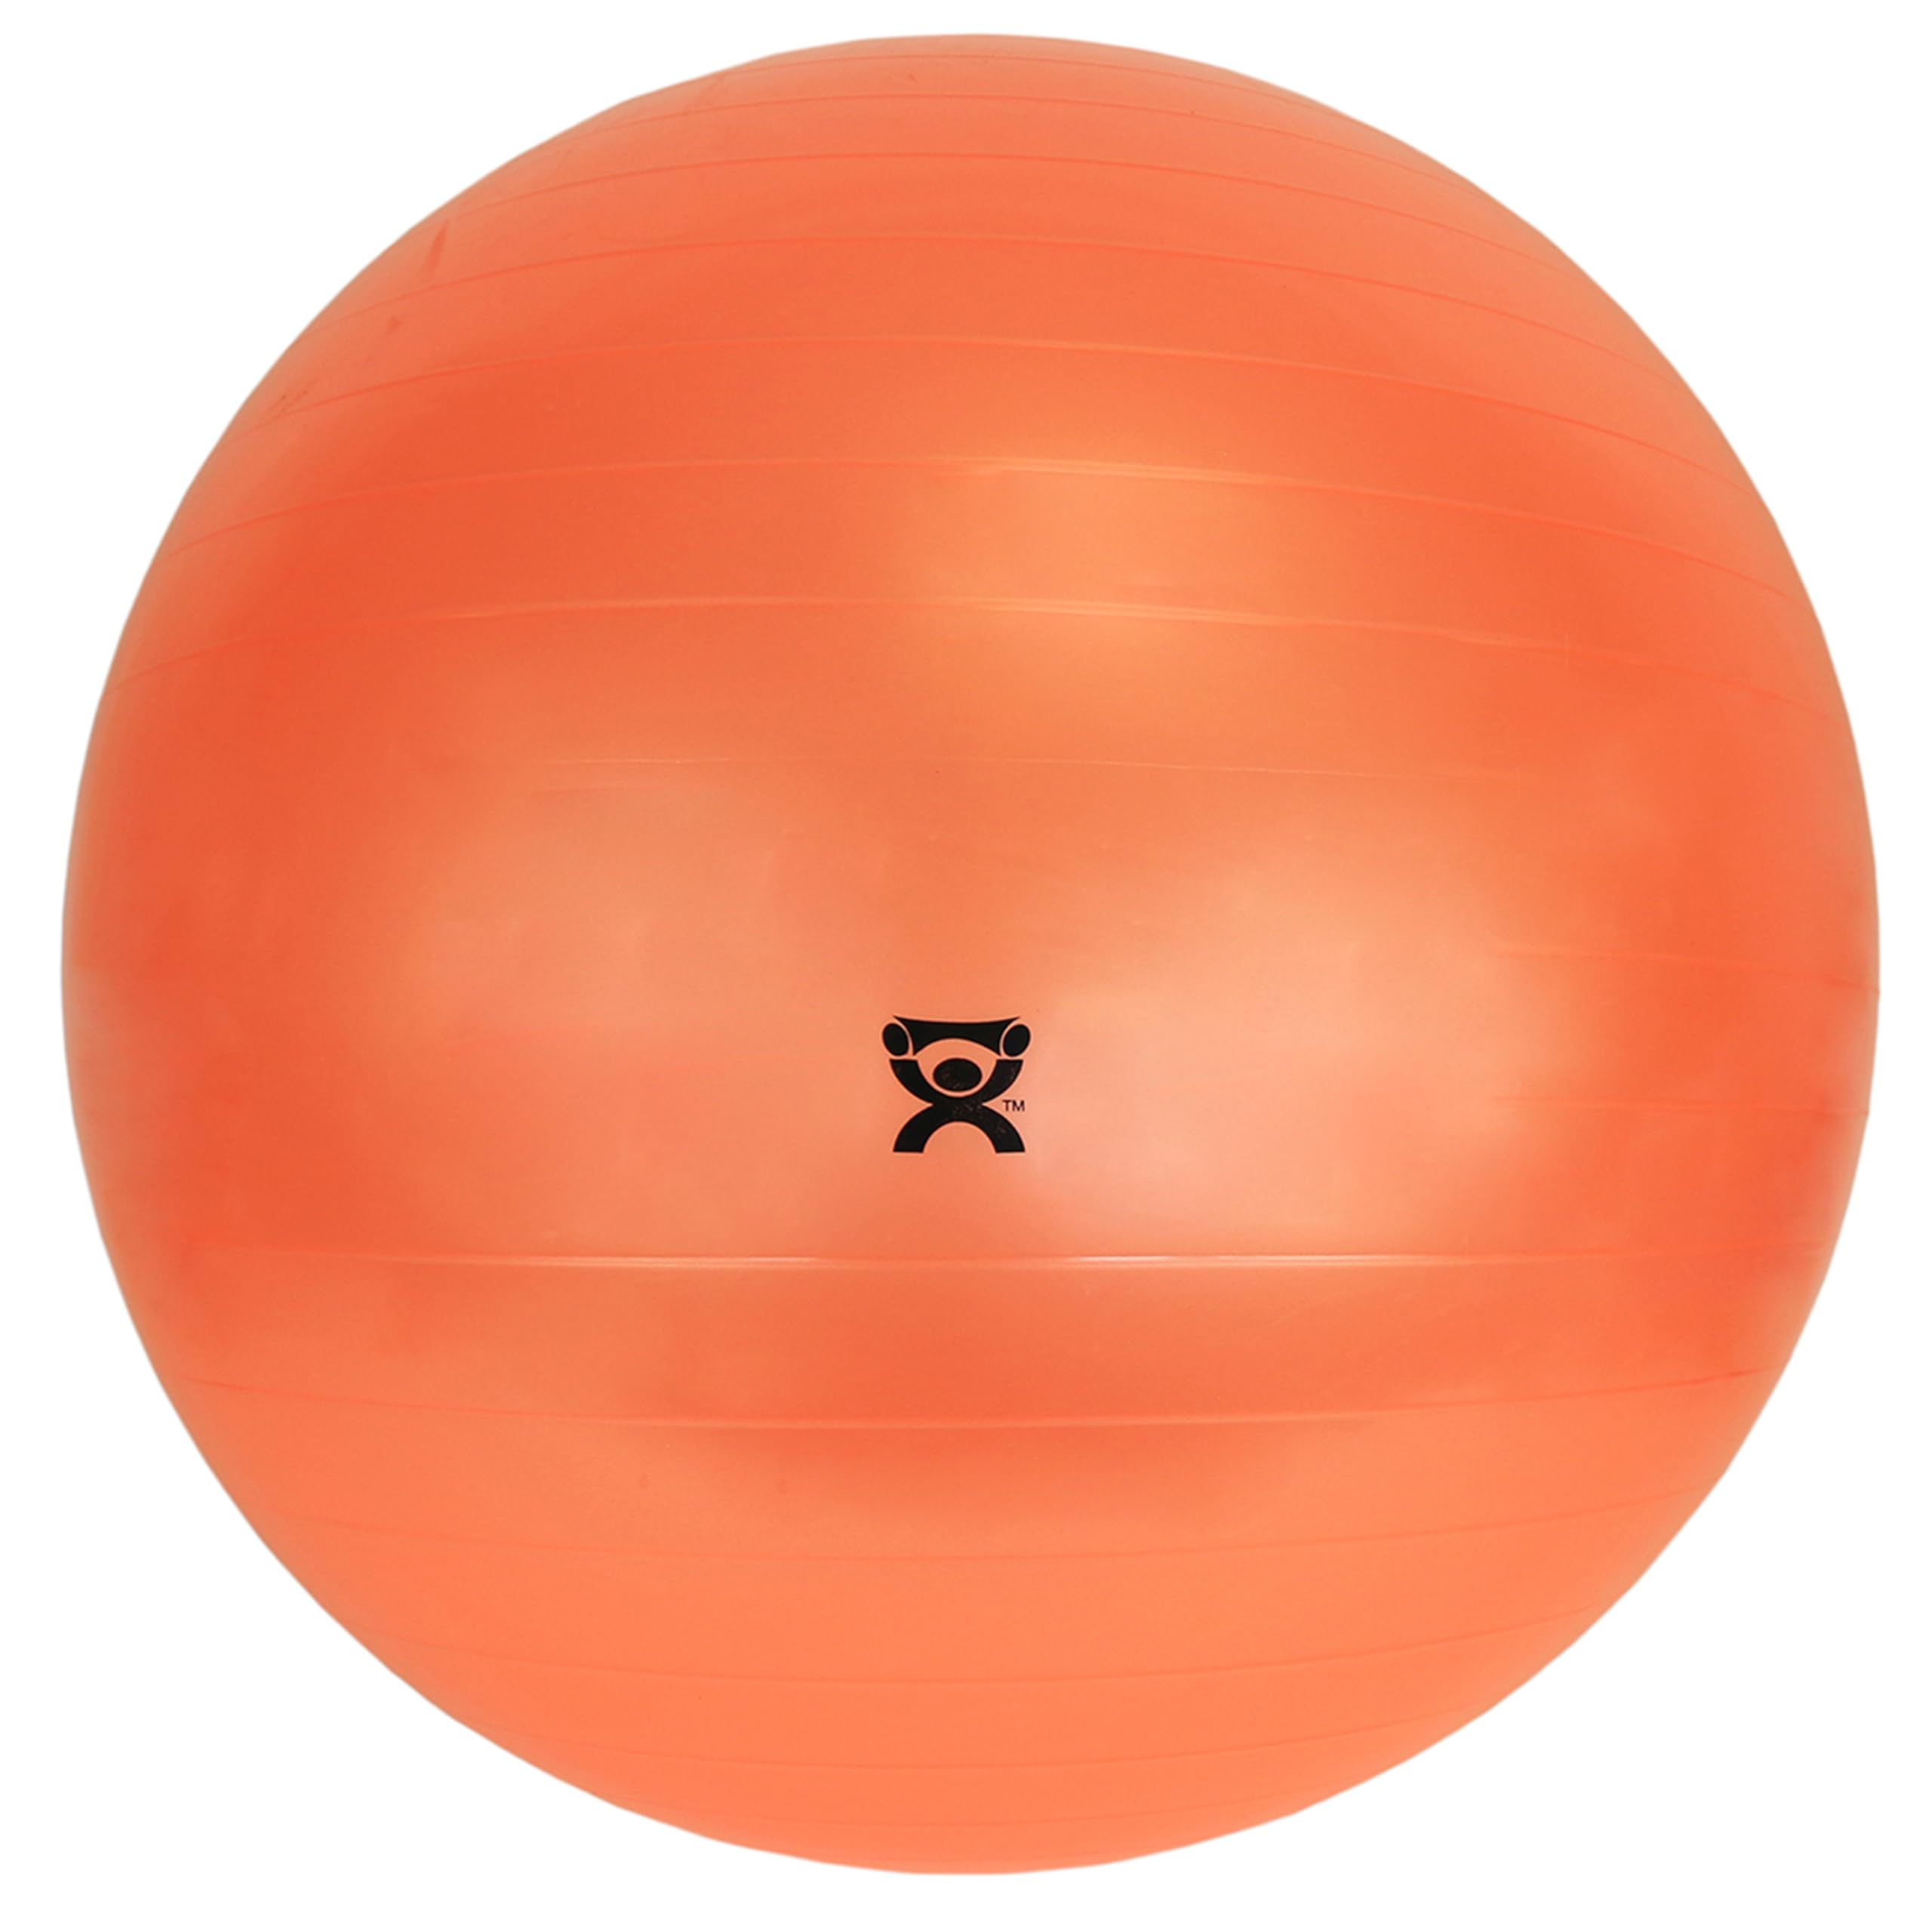 CanDo Inflatable Exercise Ball - Orange - 48 120 cm